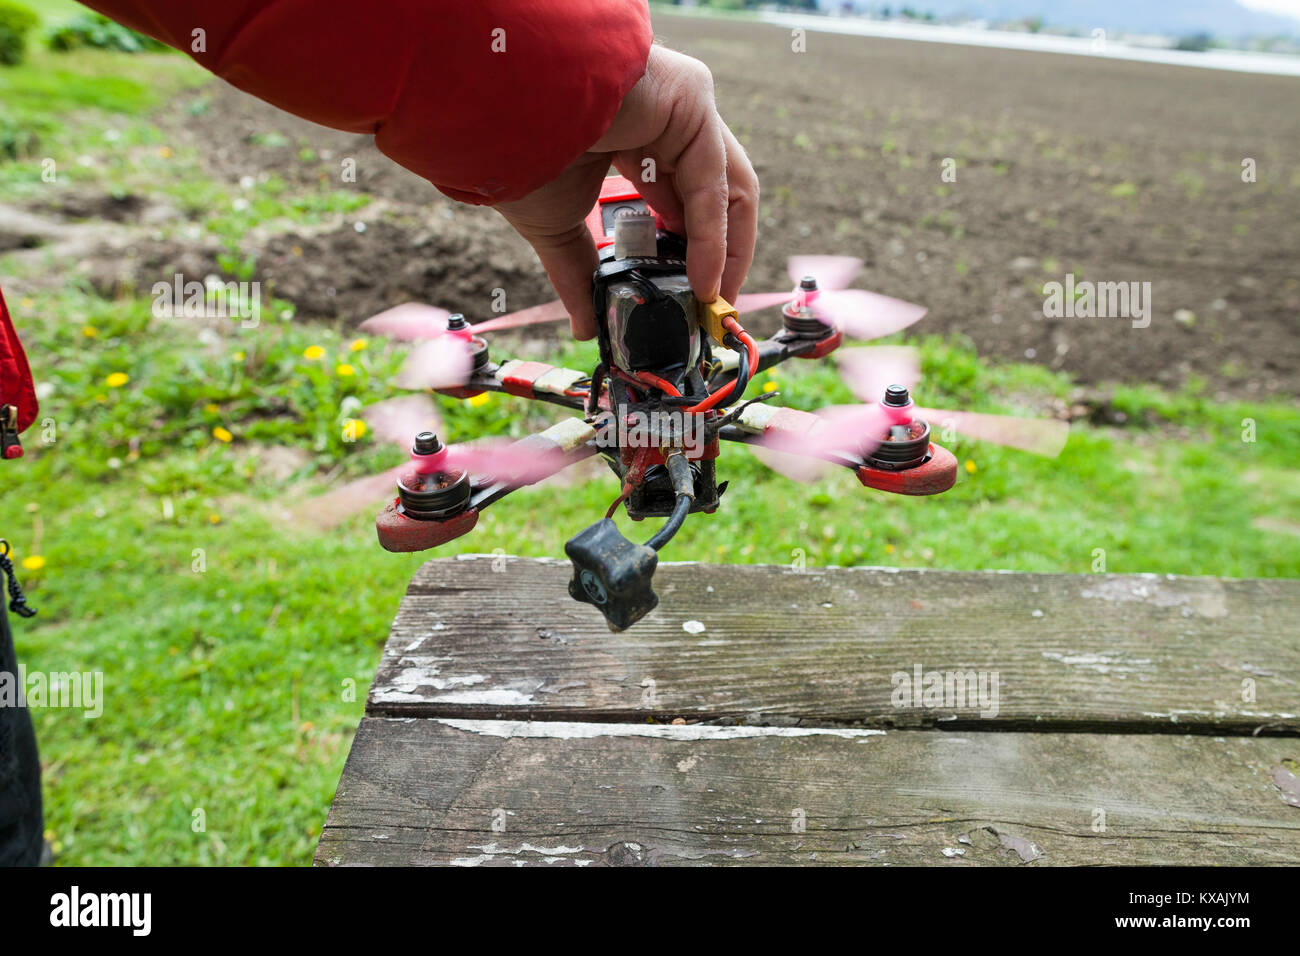 Drone racing pilot testing device, Chilliwack, British Columbia, Canada Stock Photo